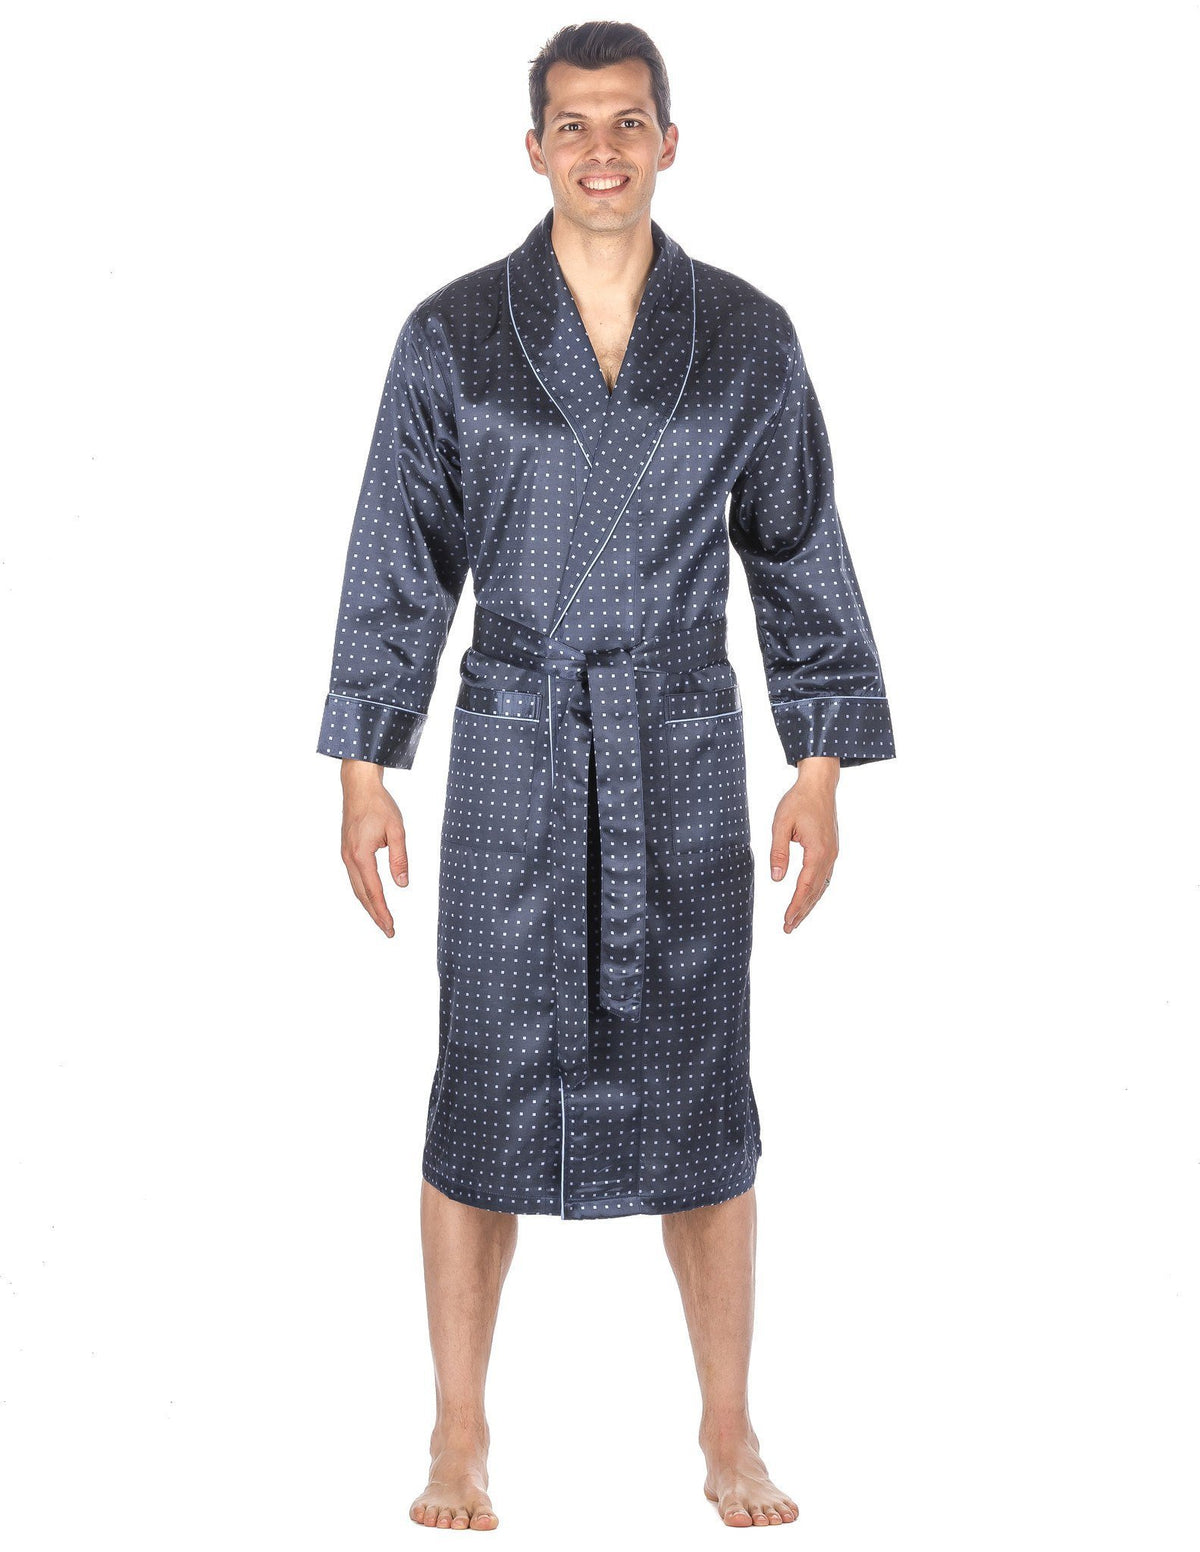 Men's Premium Satin Robe - Floating Squares